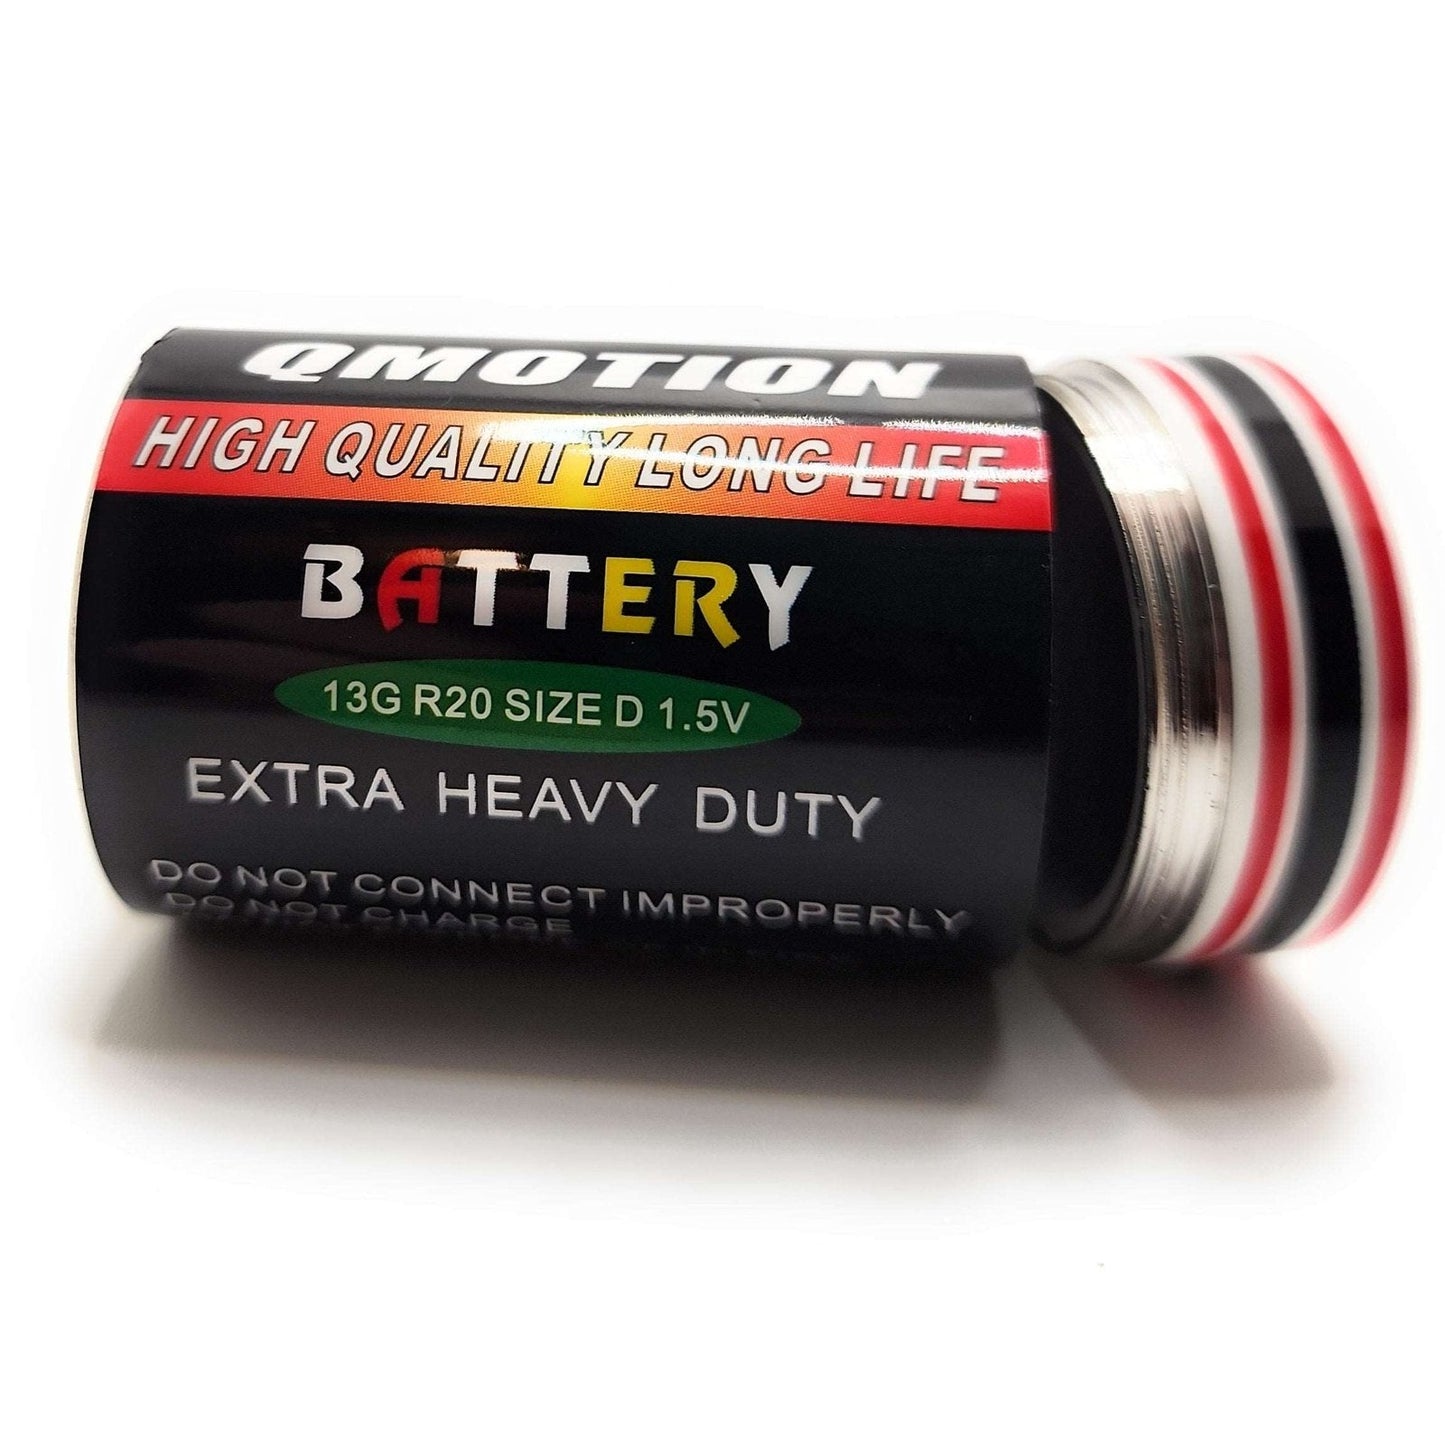 D Battery Diversion Safe Hidden Compartment Pill Safe shop.AxeDr.com Diversion Safe, Stash